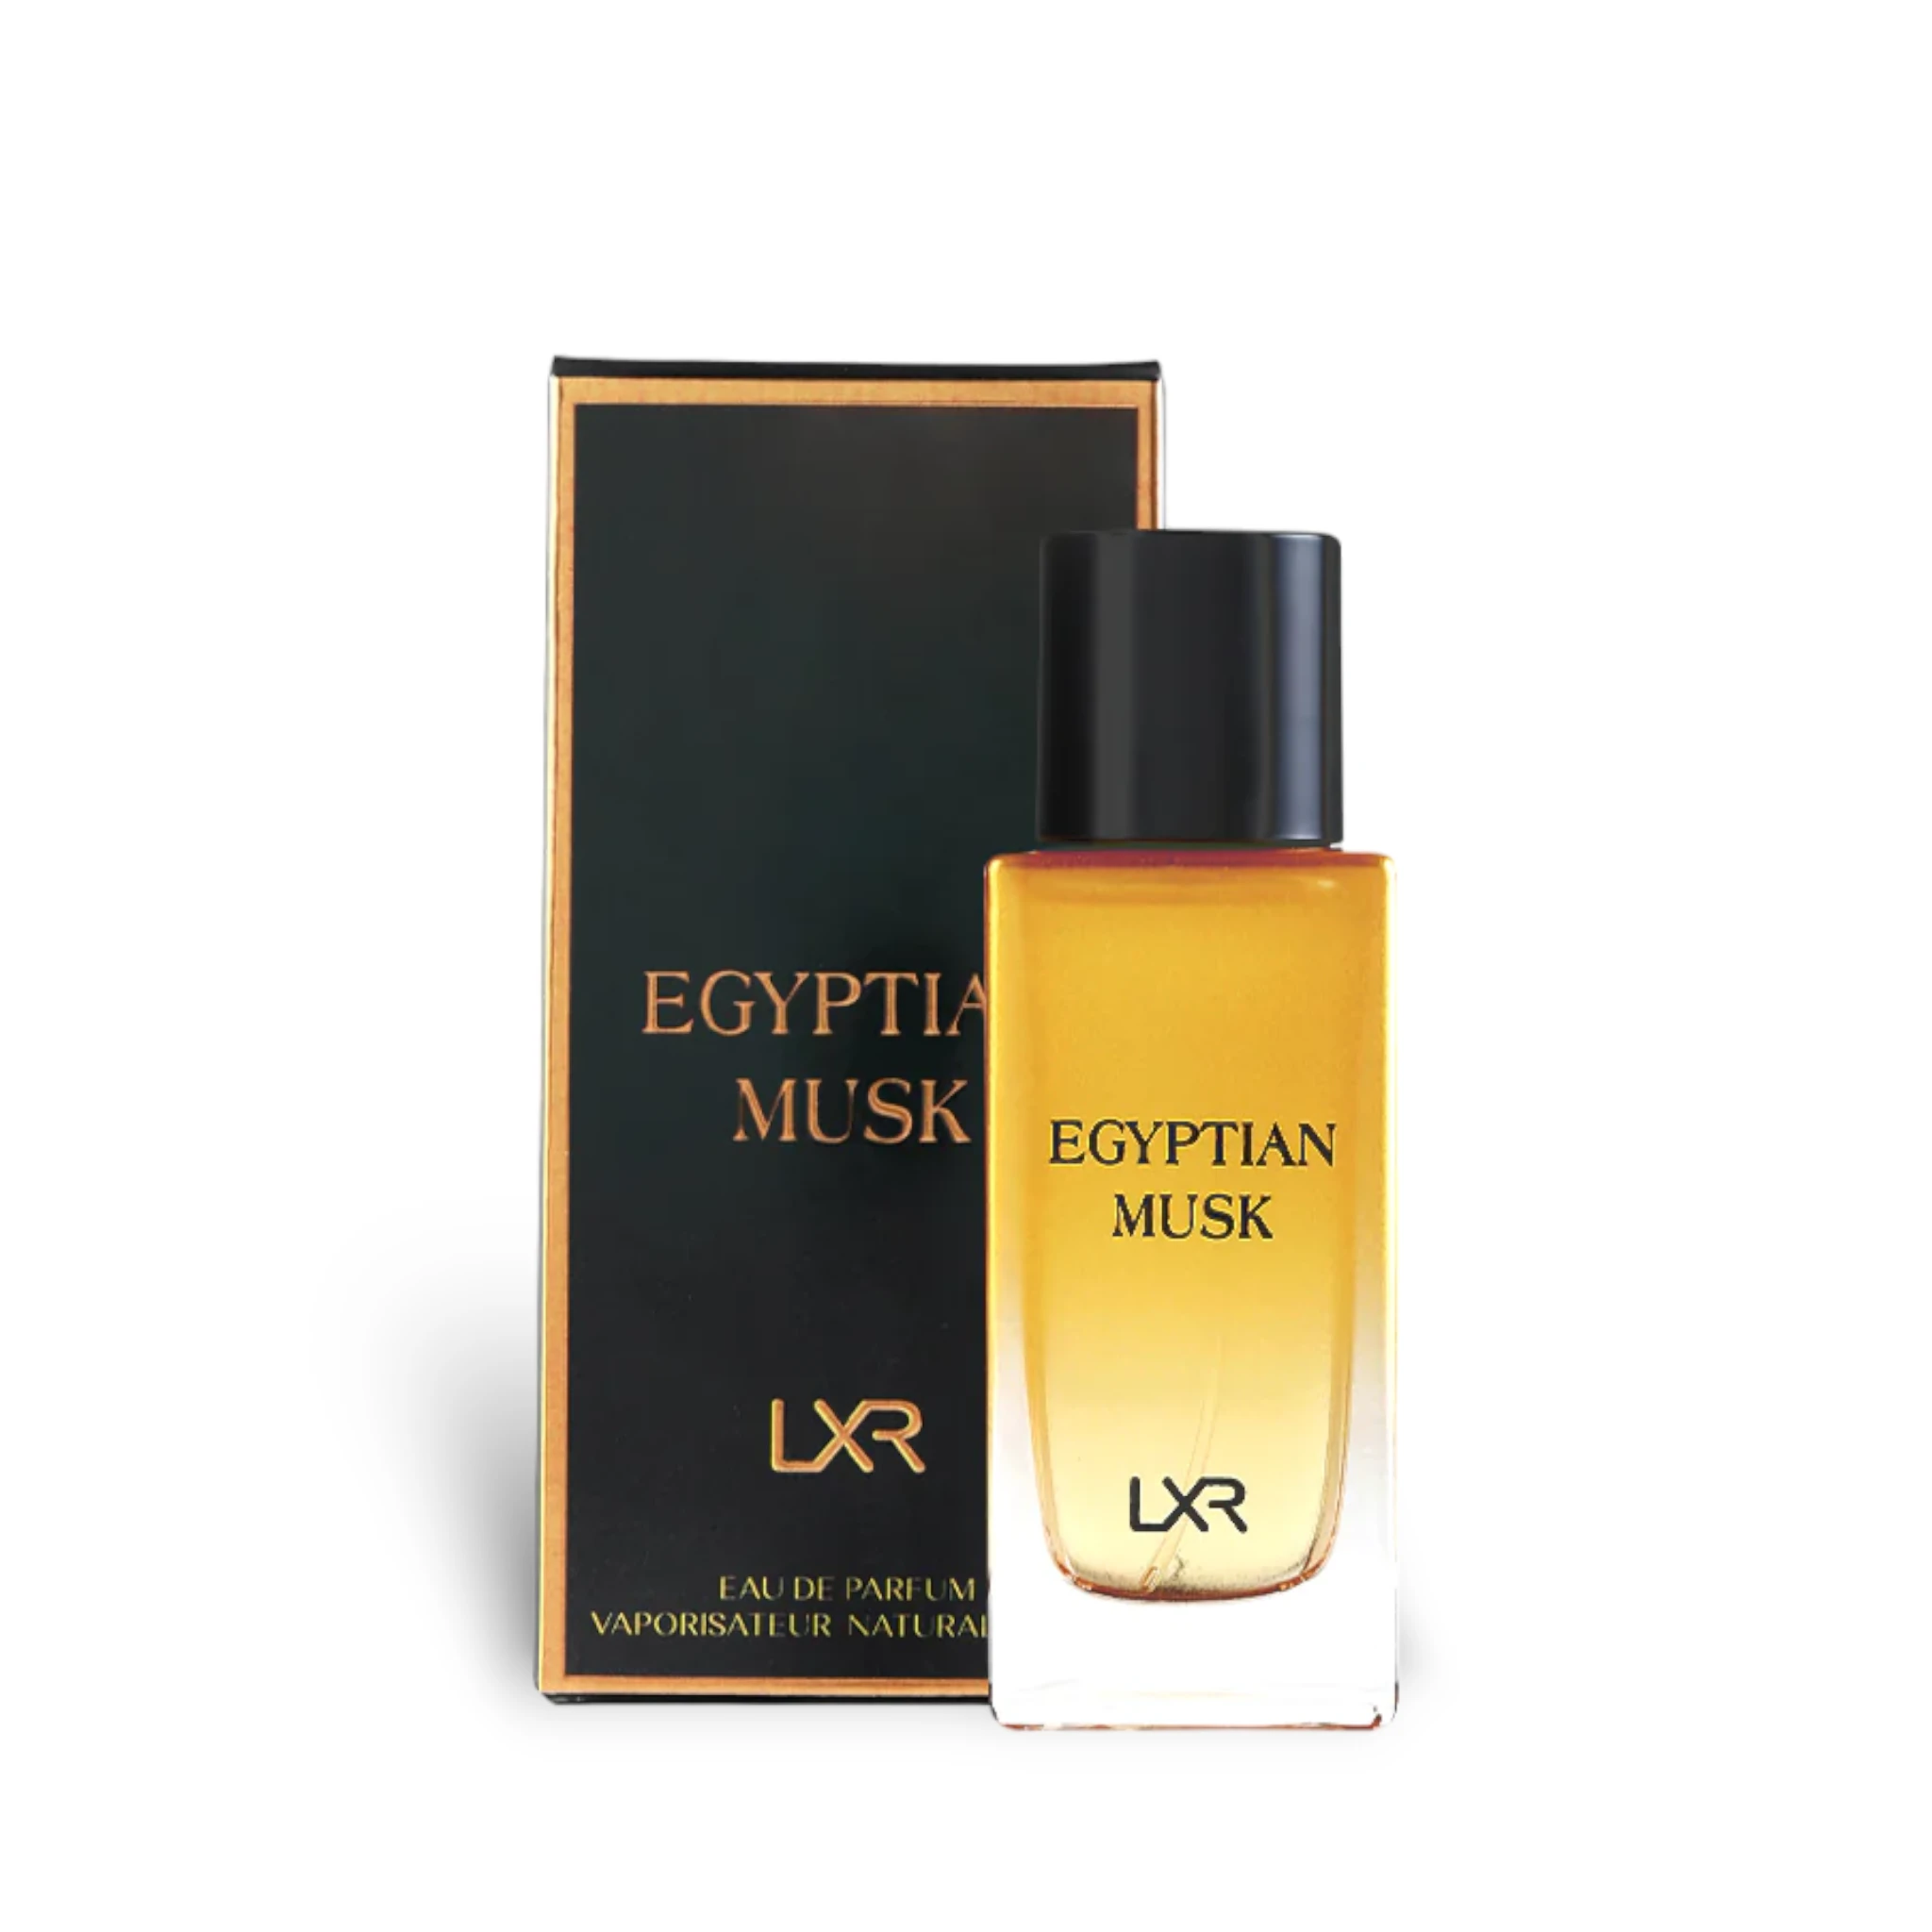 Egyptian Musk Perfume Eau De Parfum 50Ml By Lxr